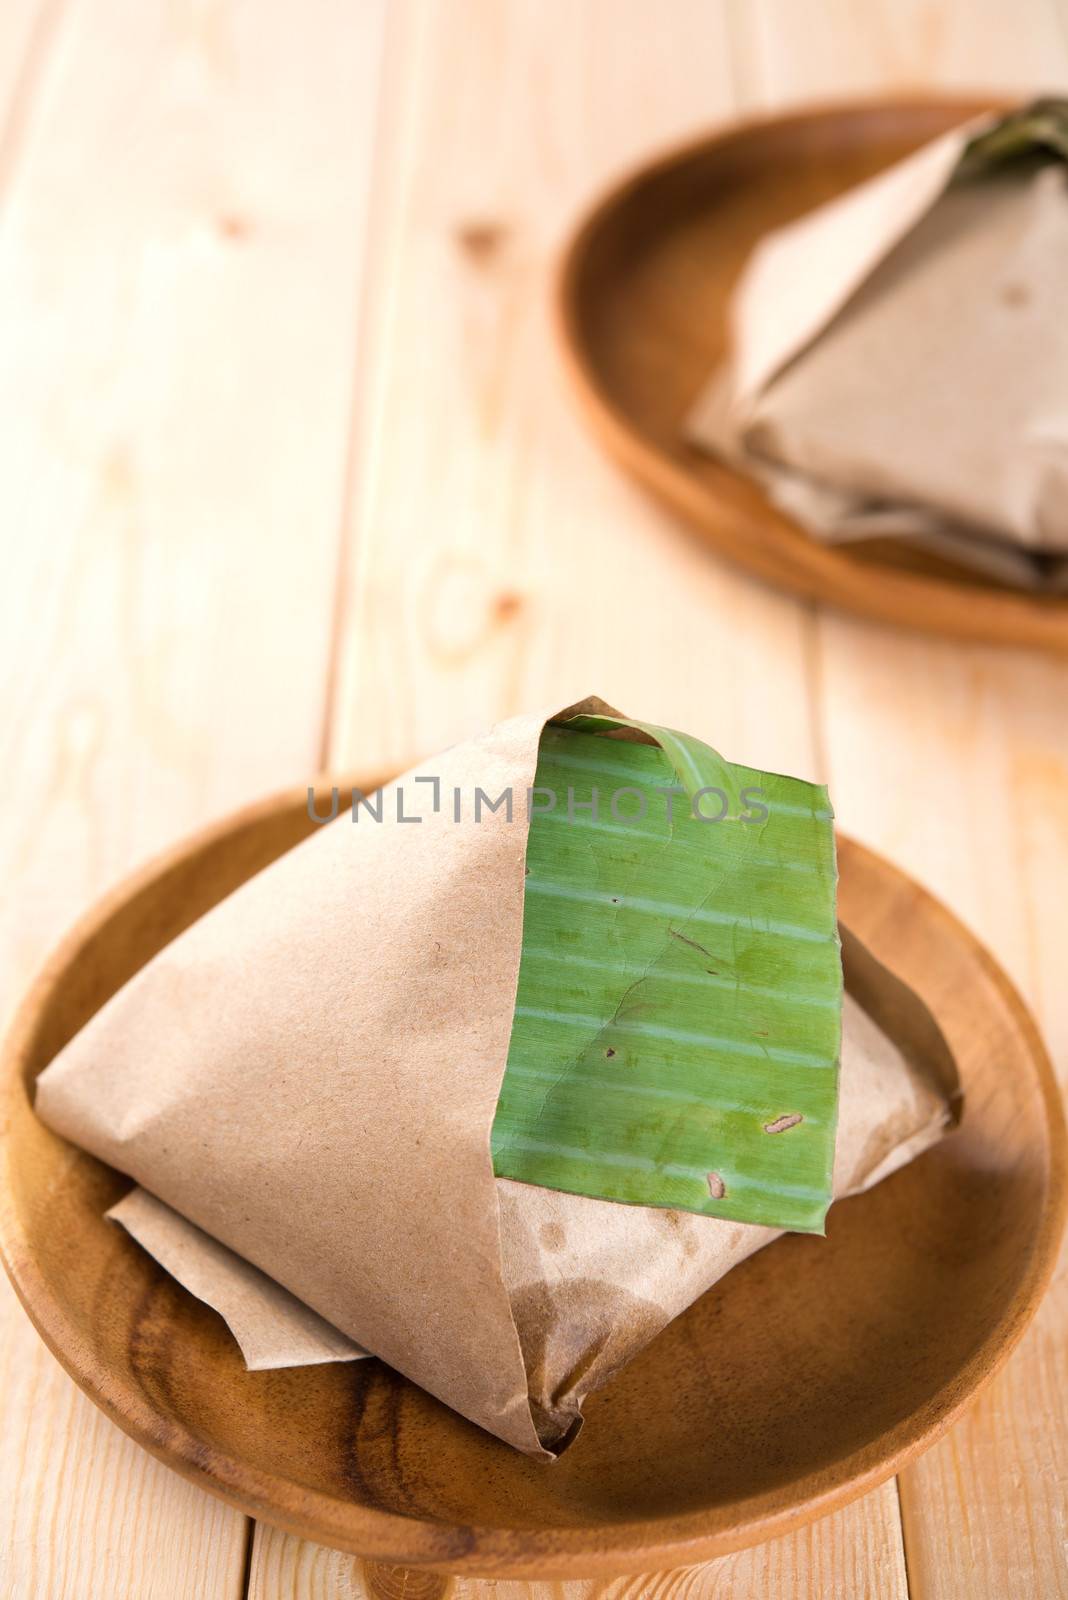 Traditional Malay food Nasi Lemak